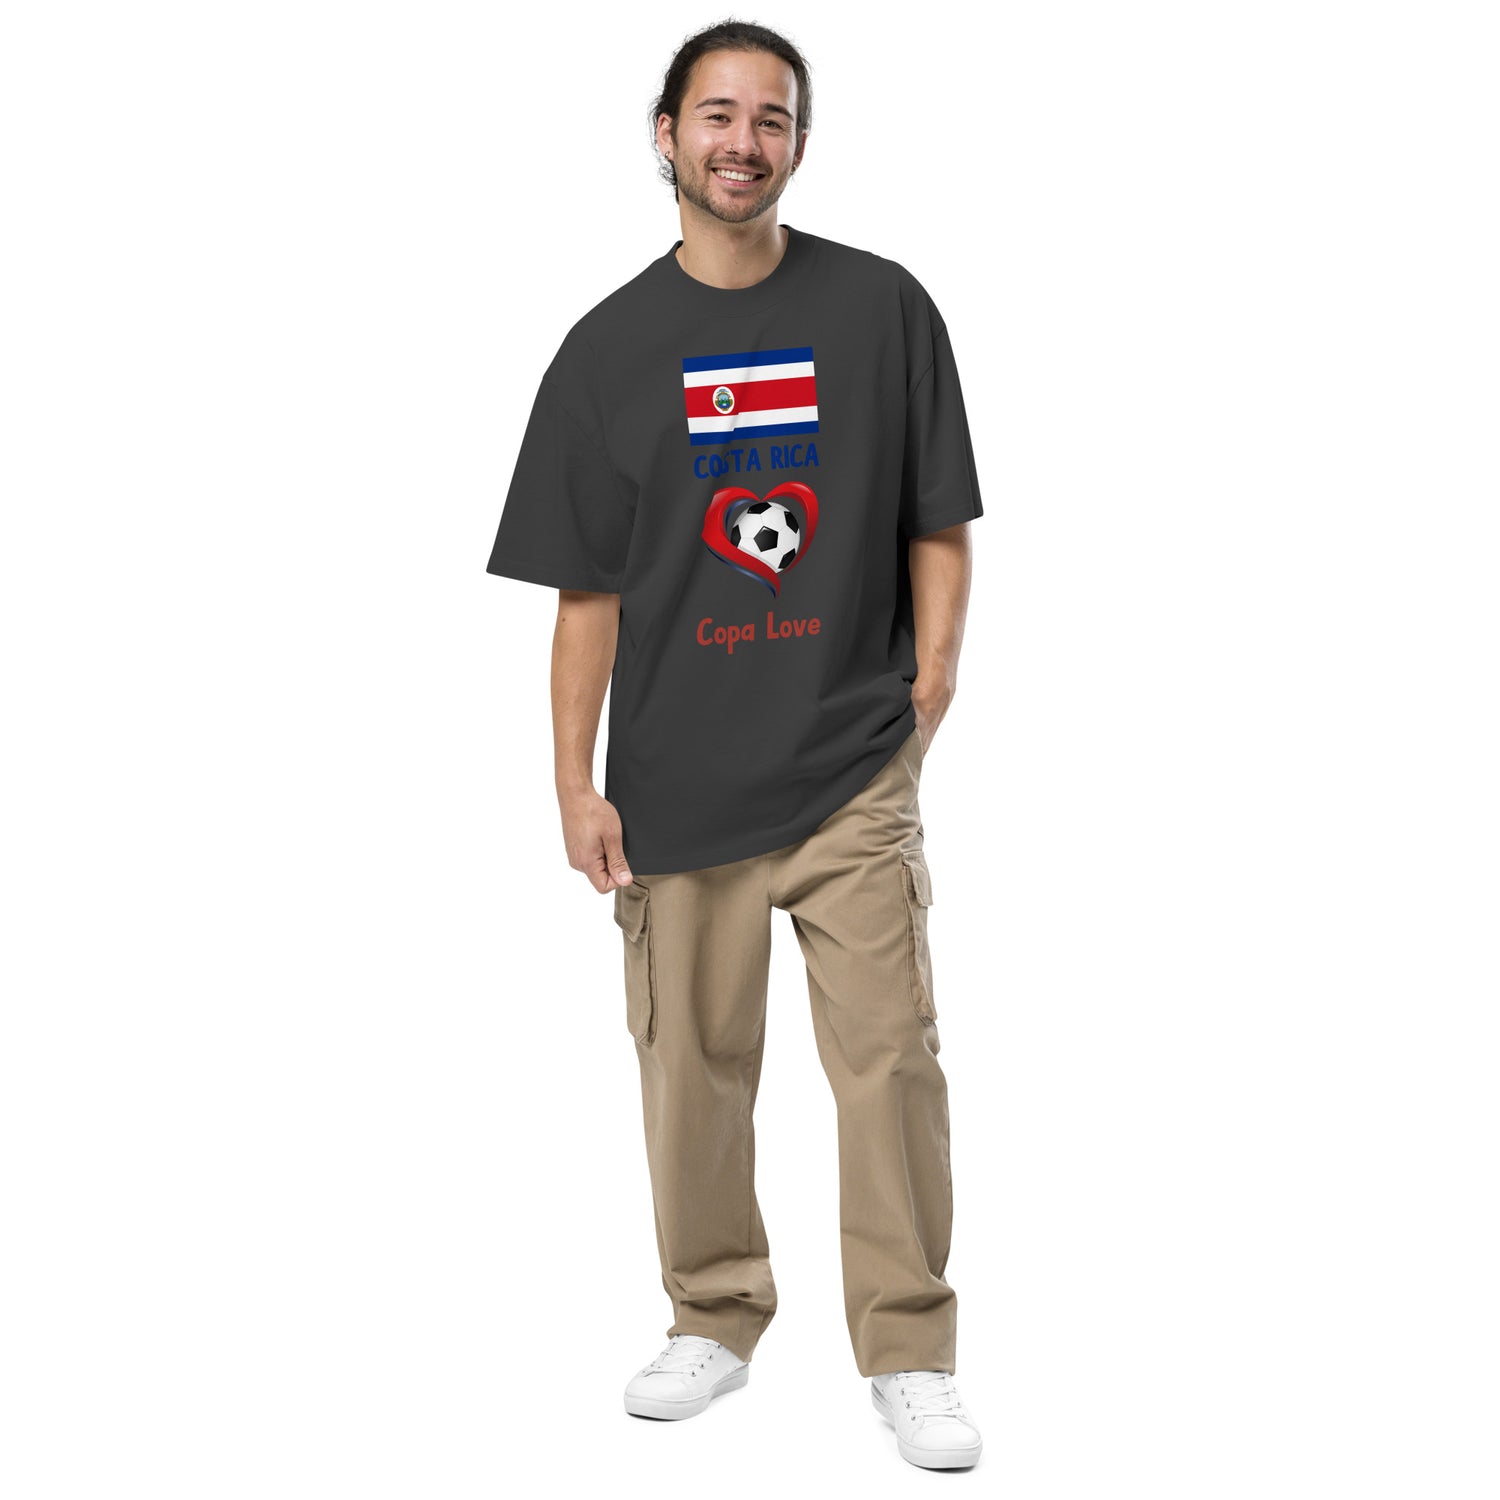 COSTA RICA - Copa Love Unisex Oversized Faded T-Shirt